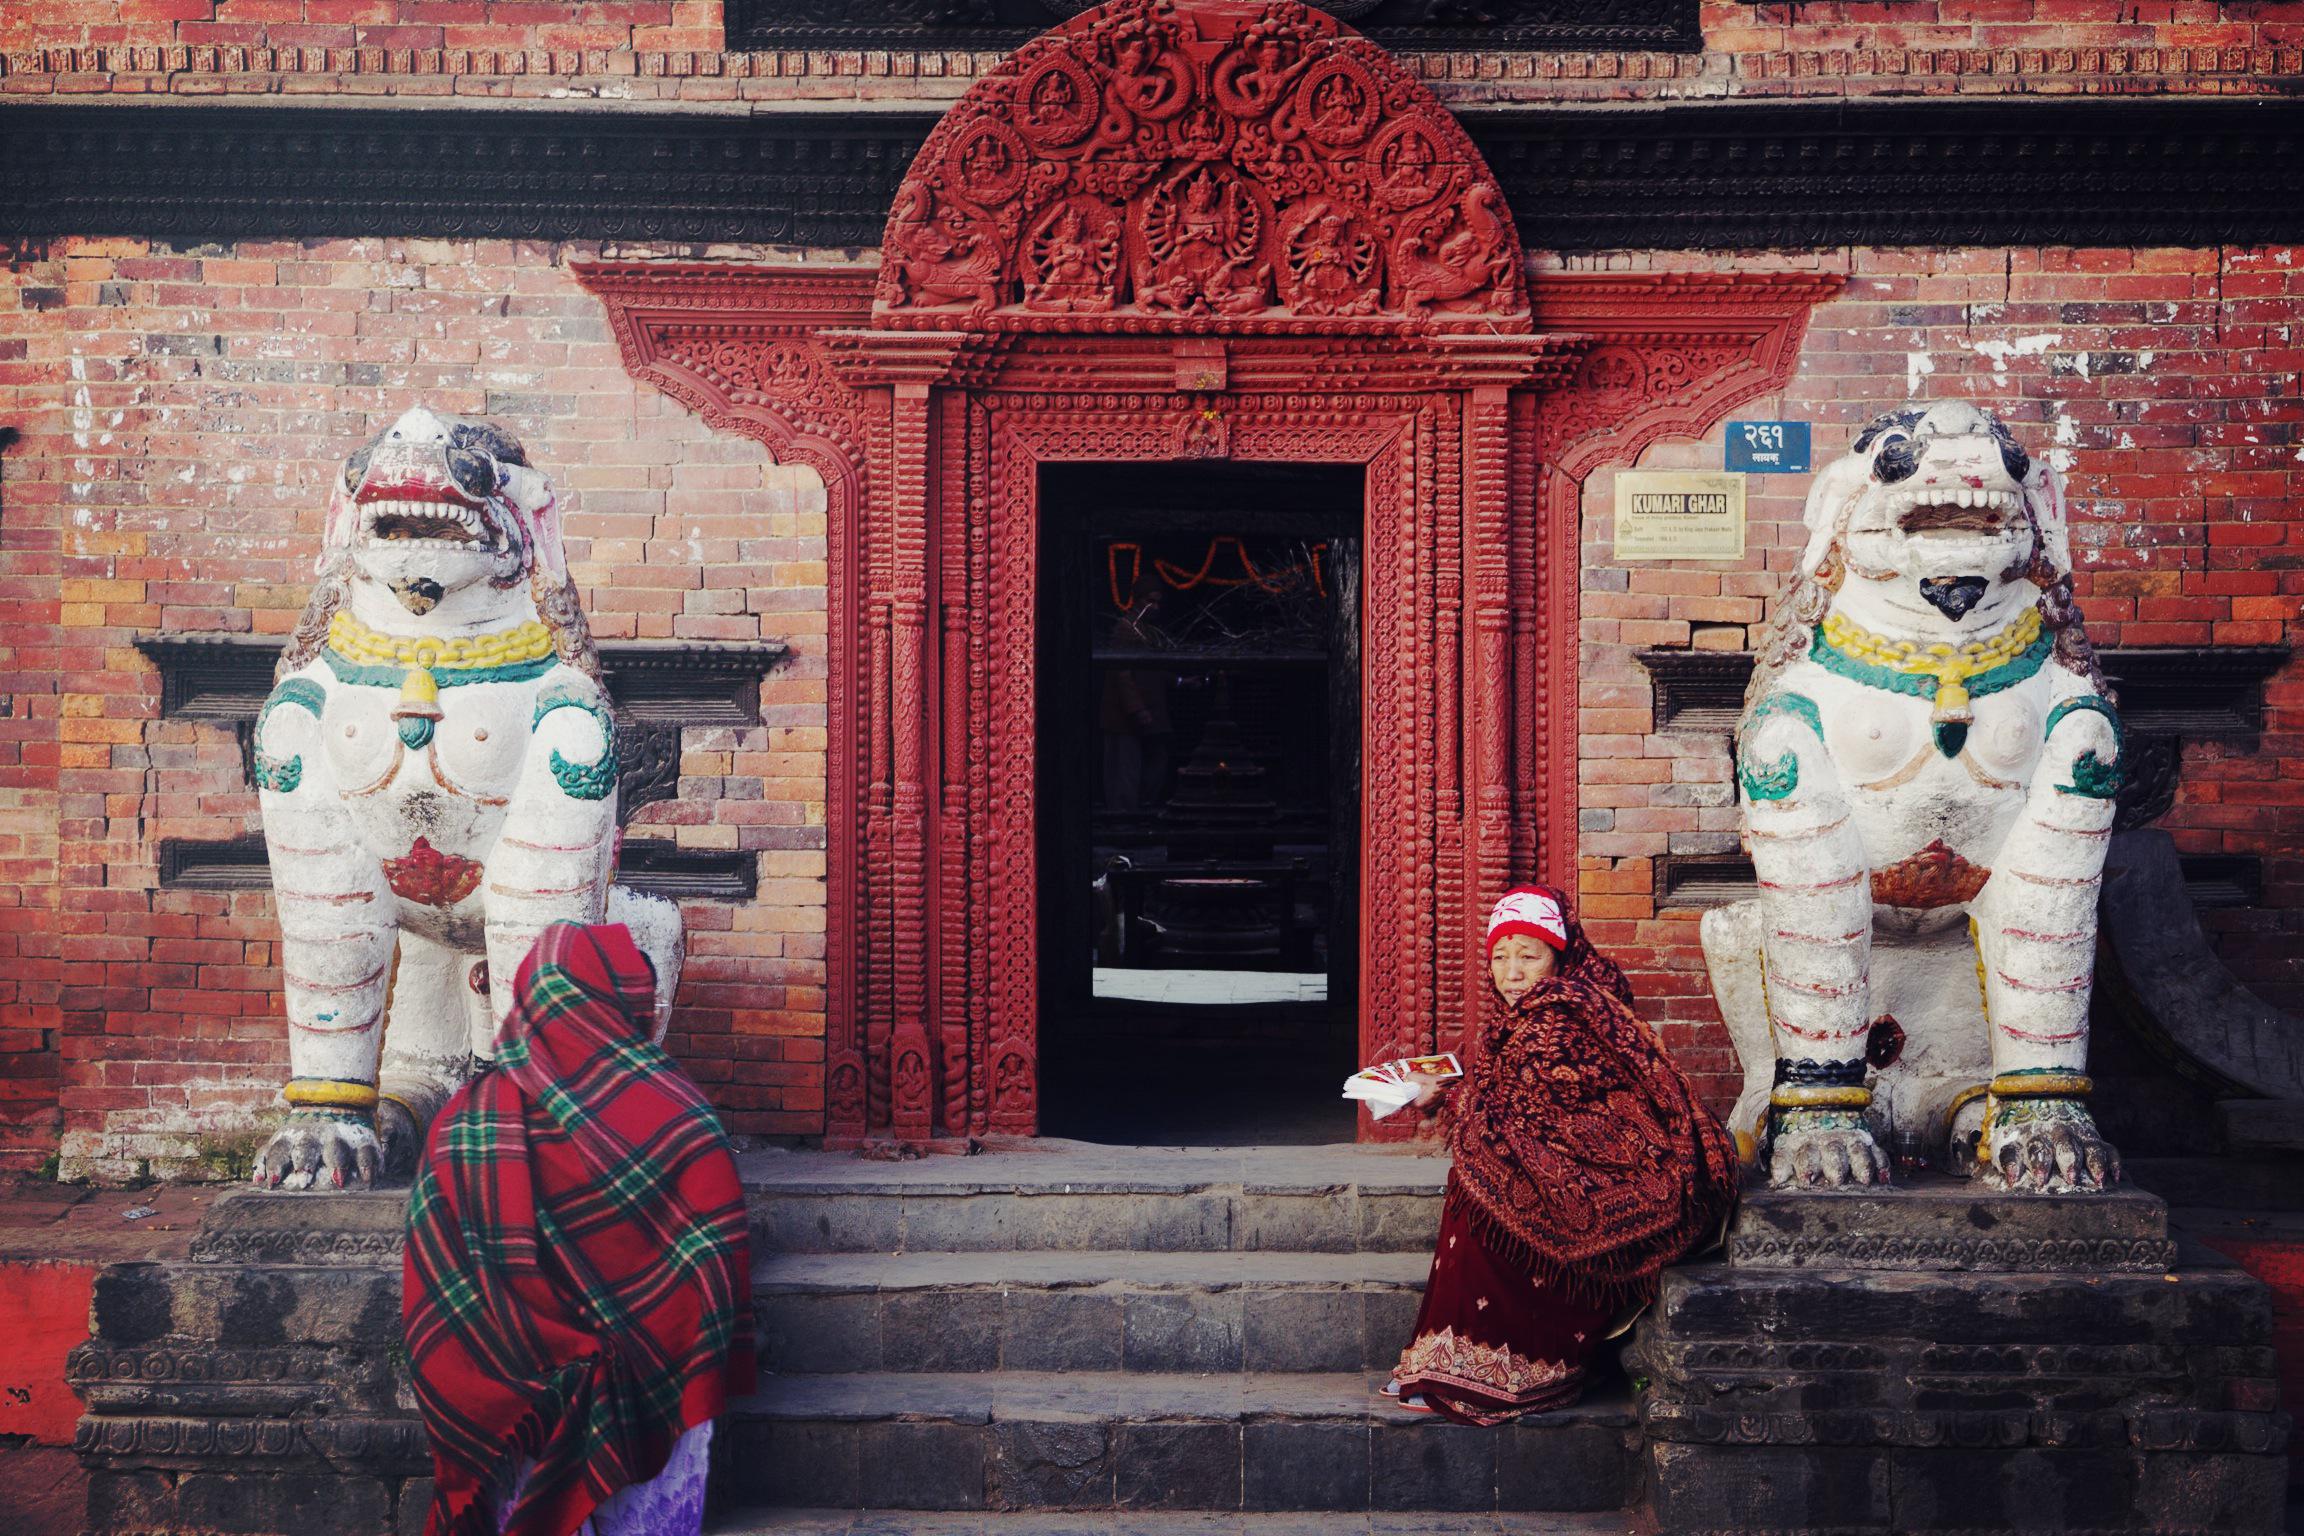 Gallery Nepal - Image 10